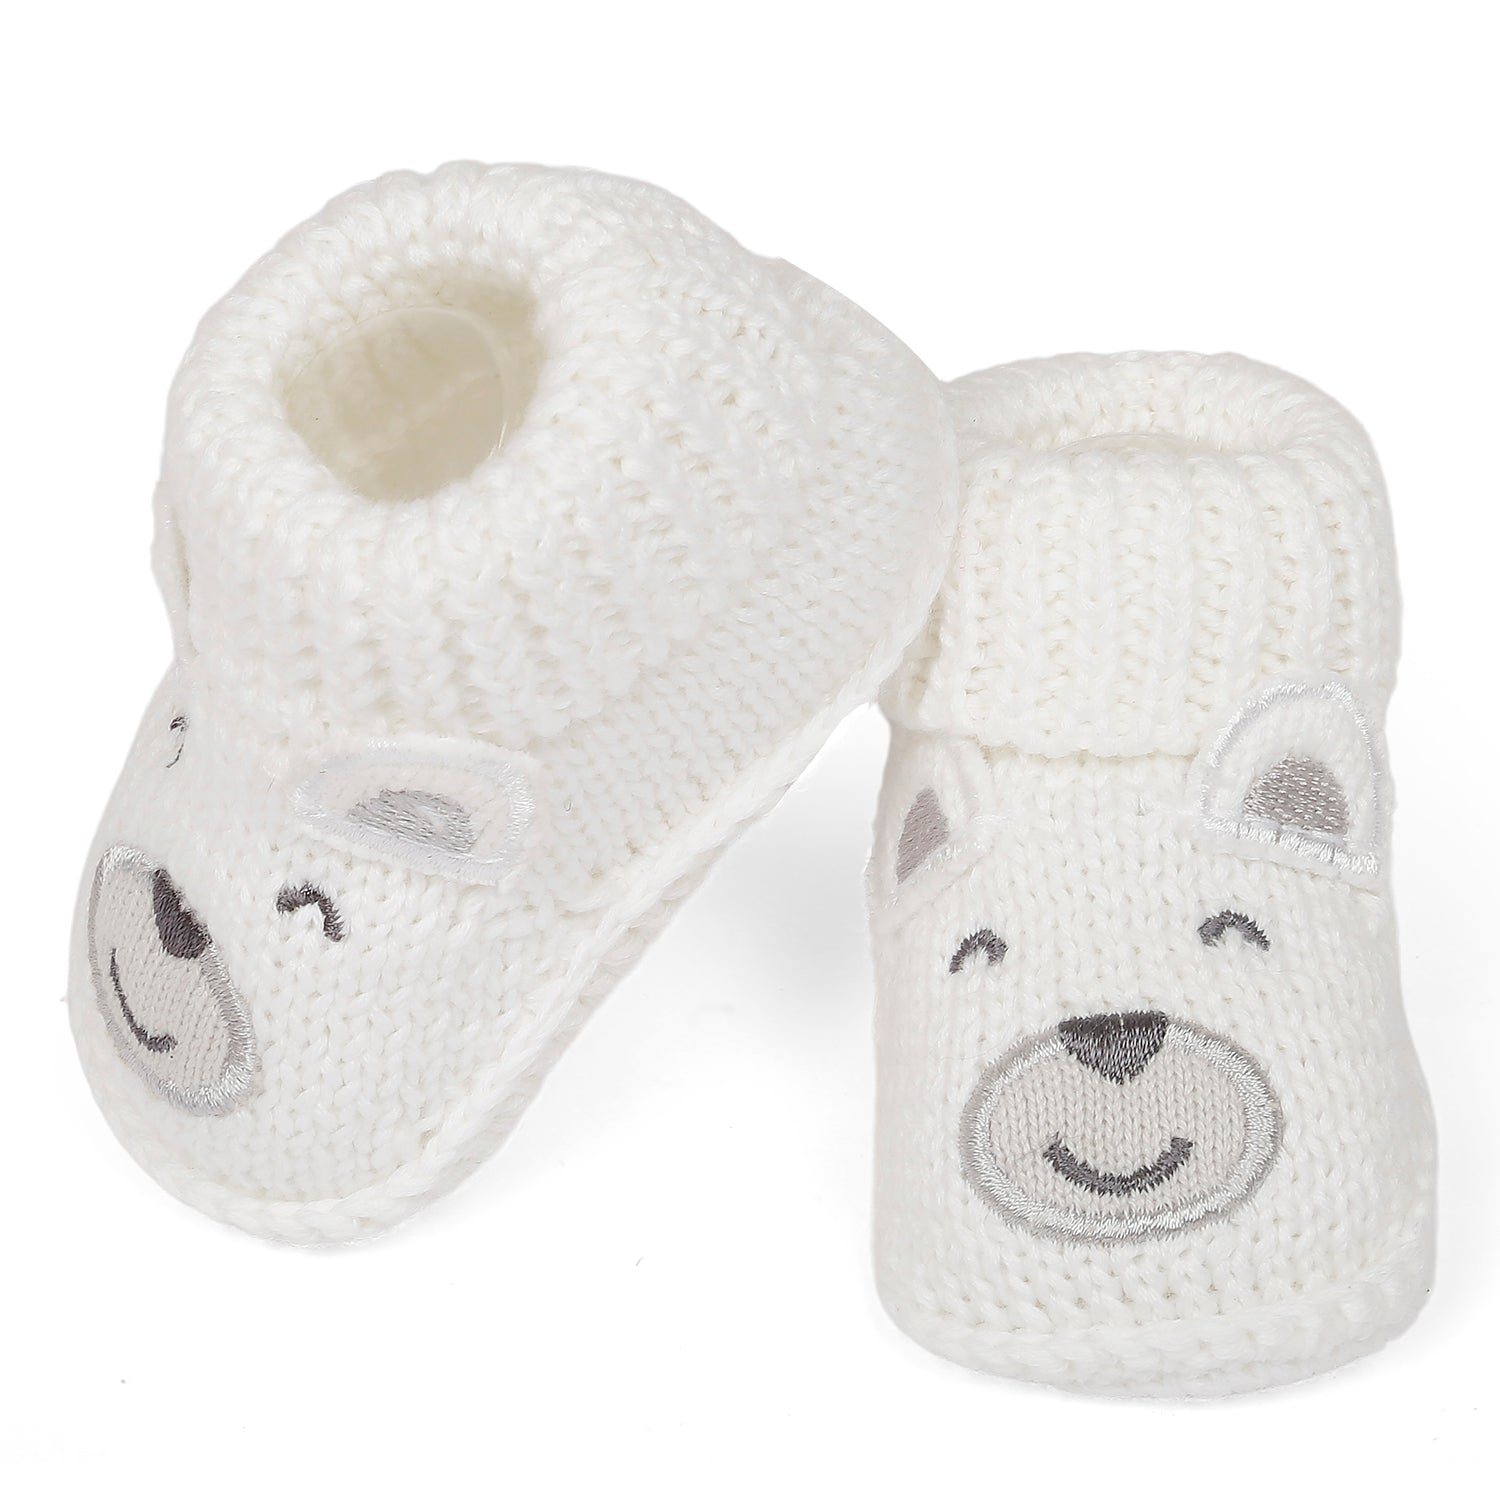 Baby Moo Happy Teddy Newborn Crochet Socks Booties - White